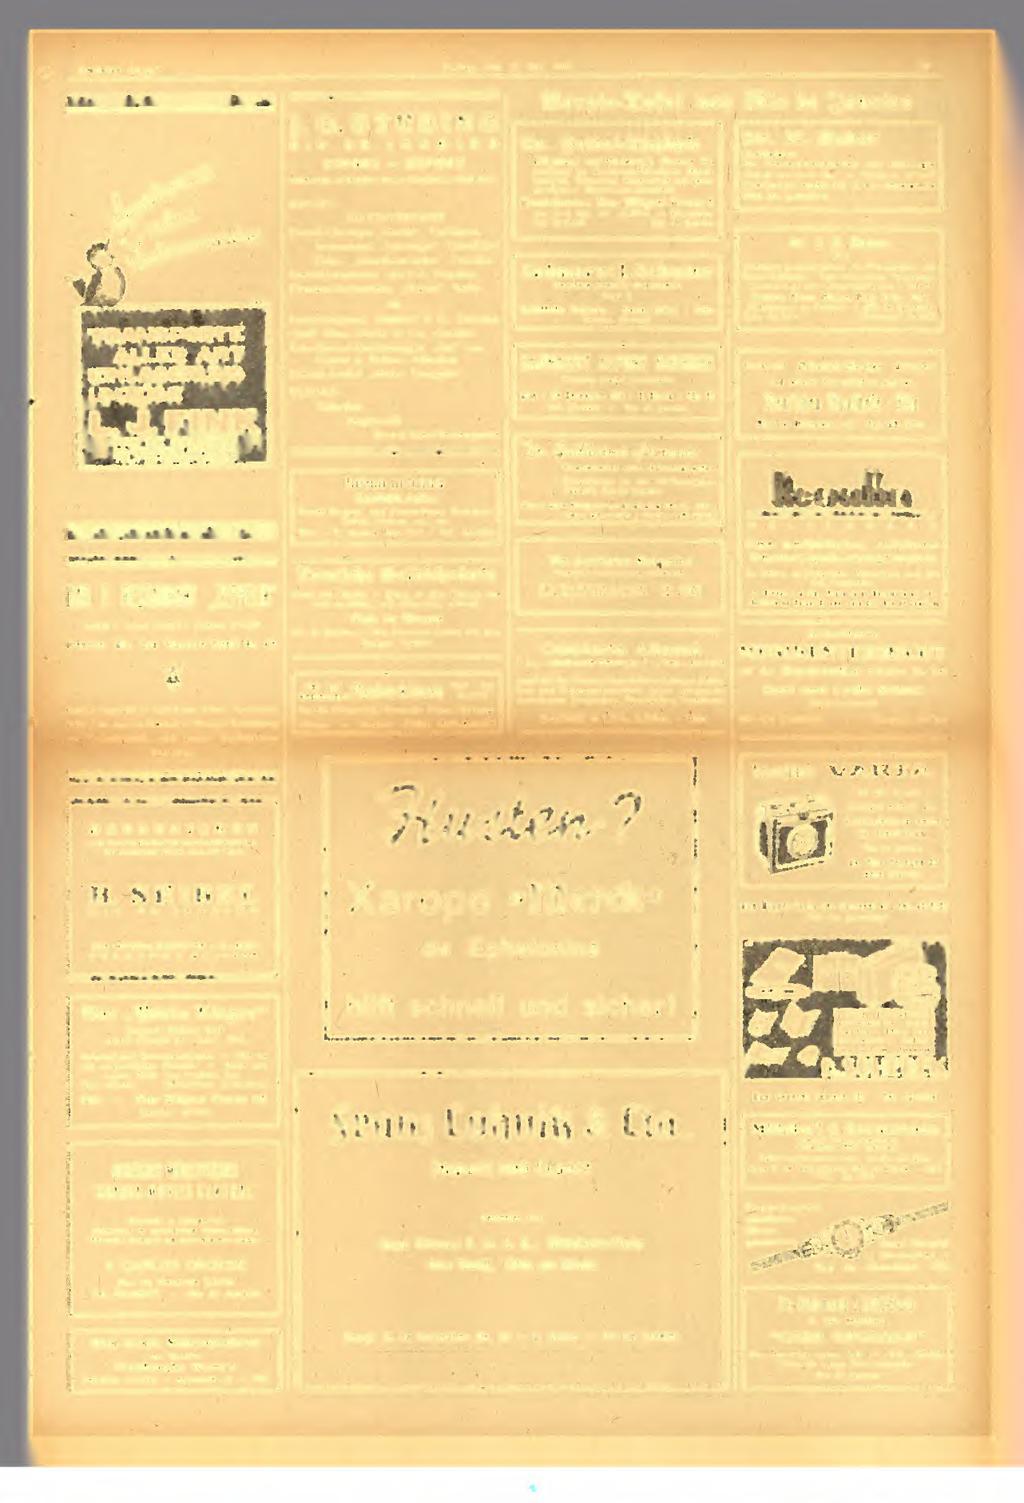 Deutscher rgen Freitag, den 2. ai 1941 21 Hiitt Otiii be i^aneit TRANSPORTE 5 ALLER ART, EINLAGERUNG UZÜGE ' L. J. FINK 'RIO DE JANEIRO AV. RODRIGUES ALVES 161 TEL.